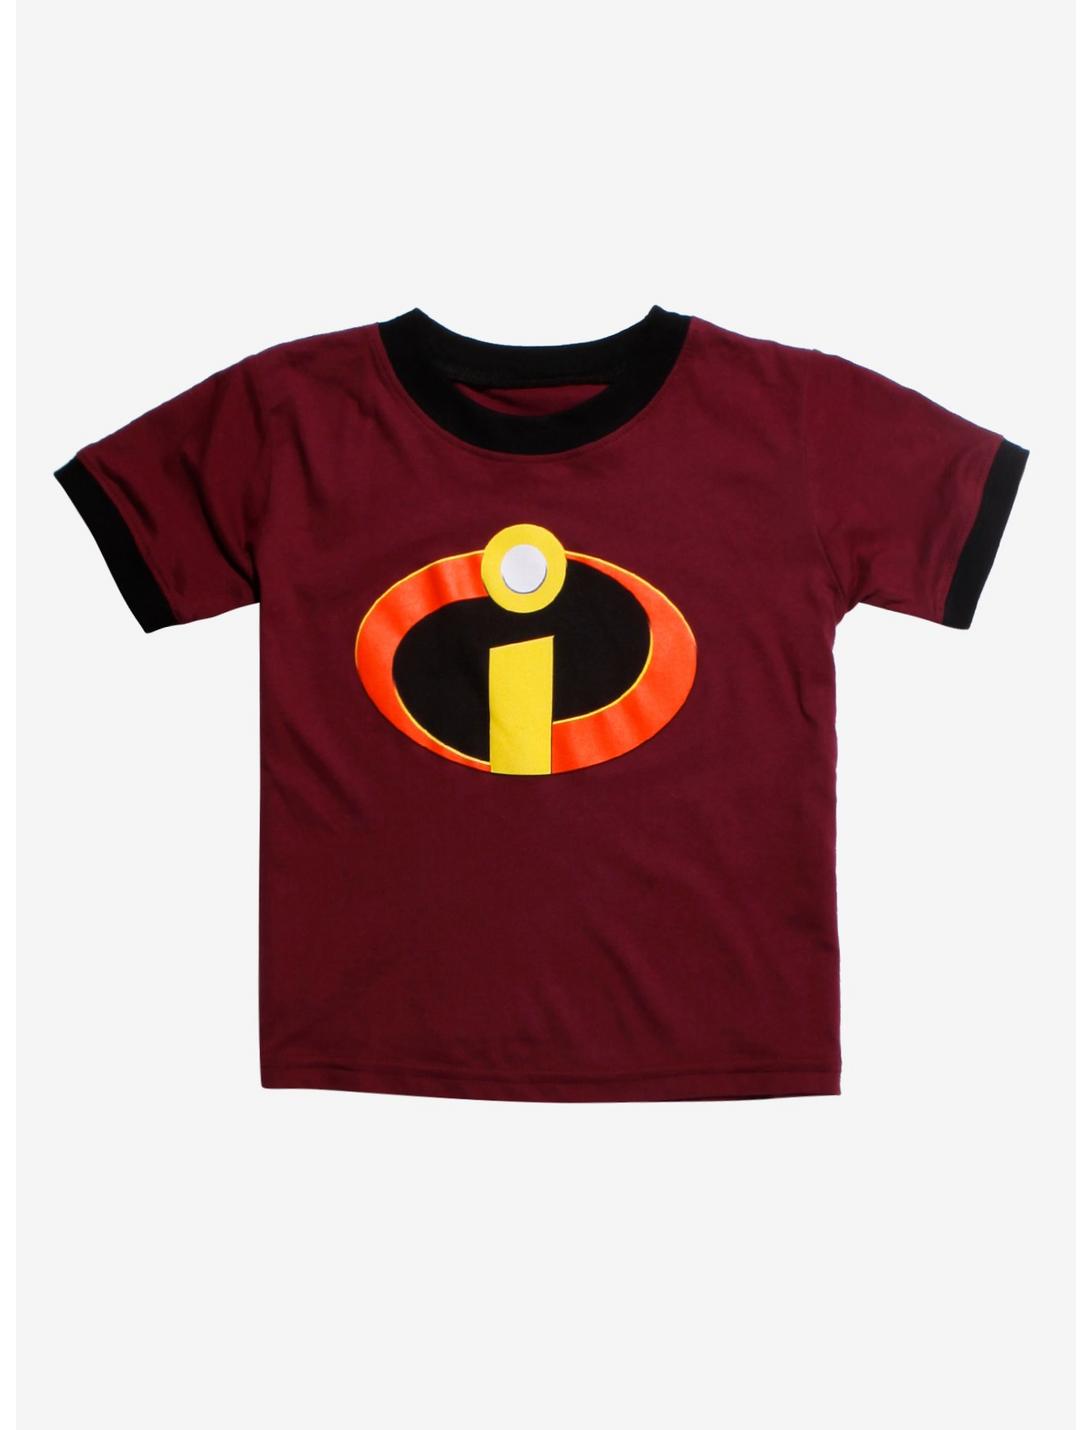 Disney Pixar The Incredibles 2 Toddler Ringer T-Shirt, RED, hi-res